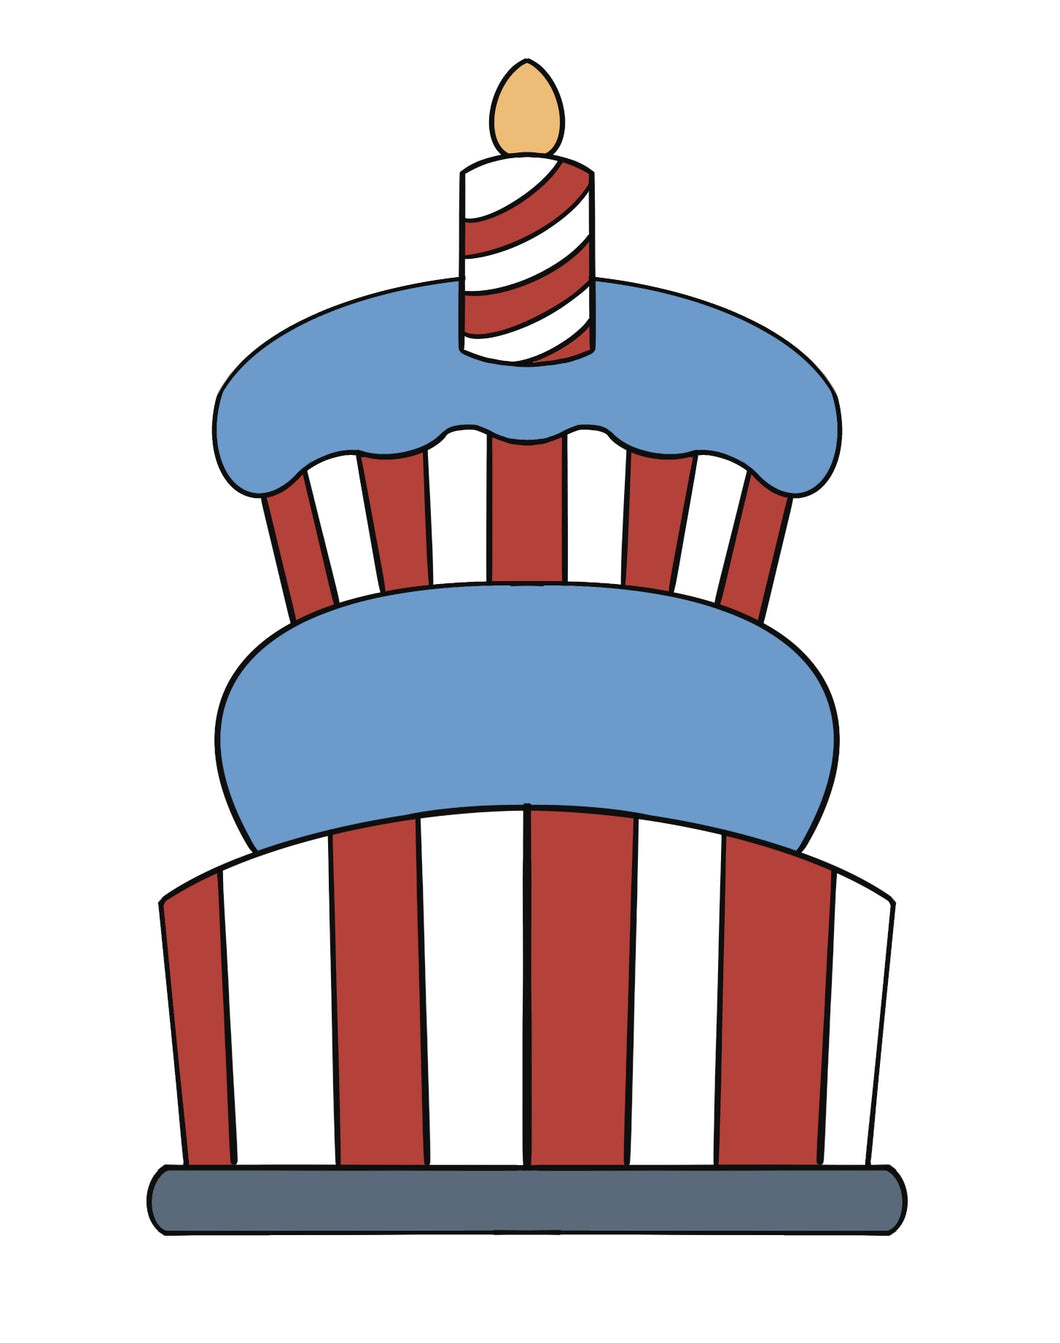 Patriotic Tiered Cake